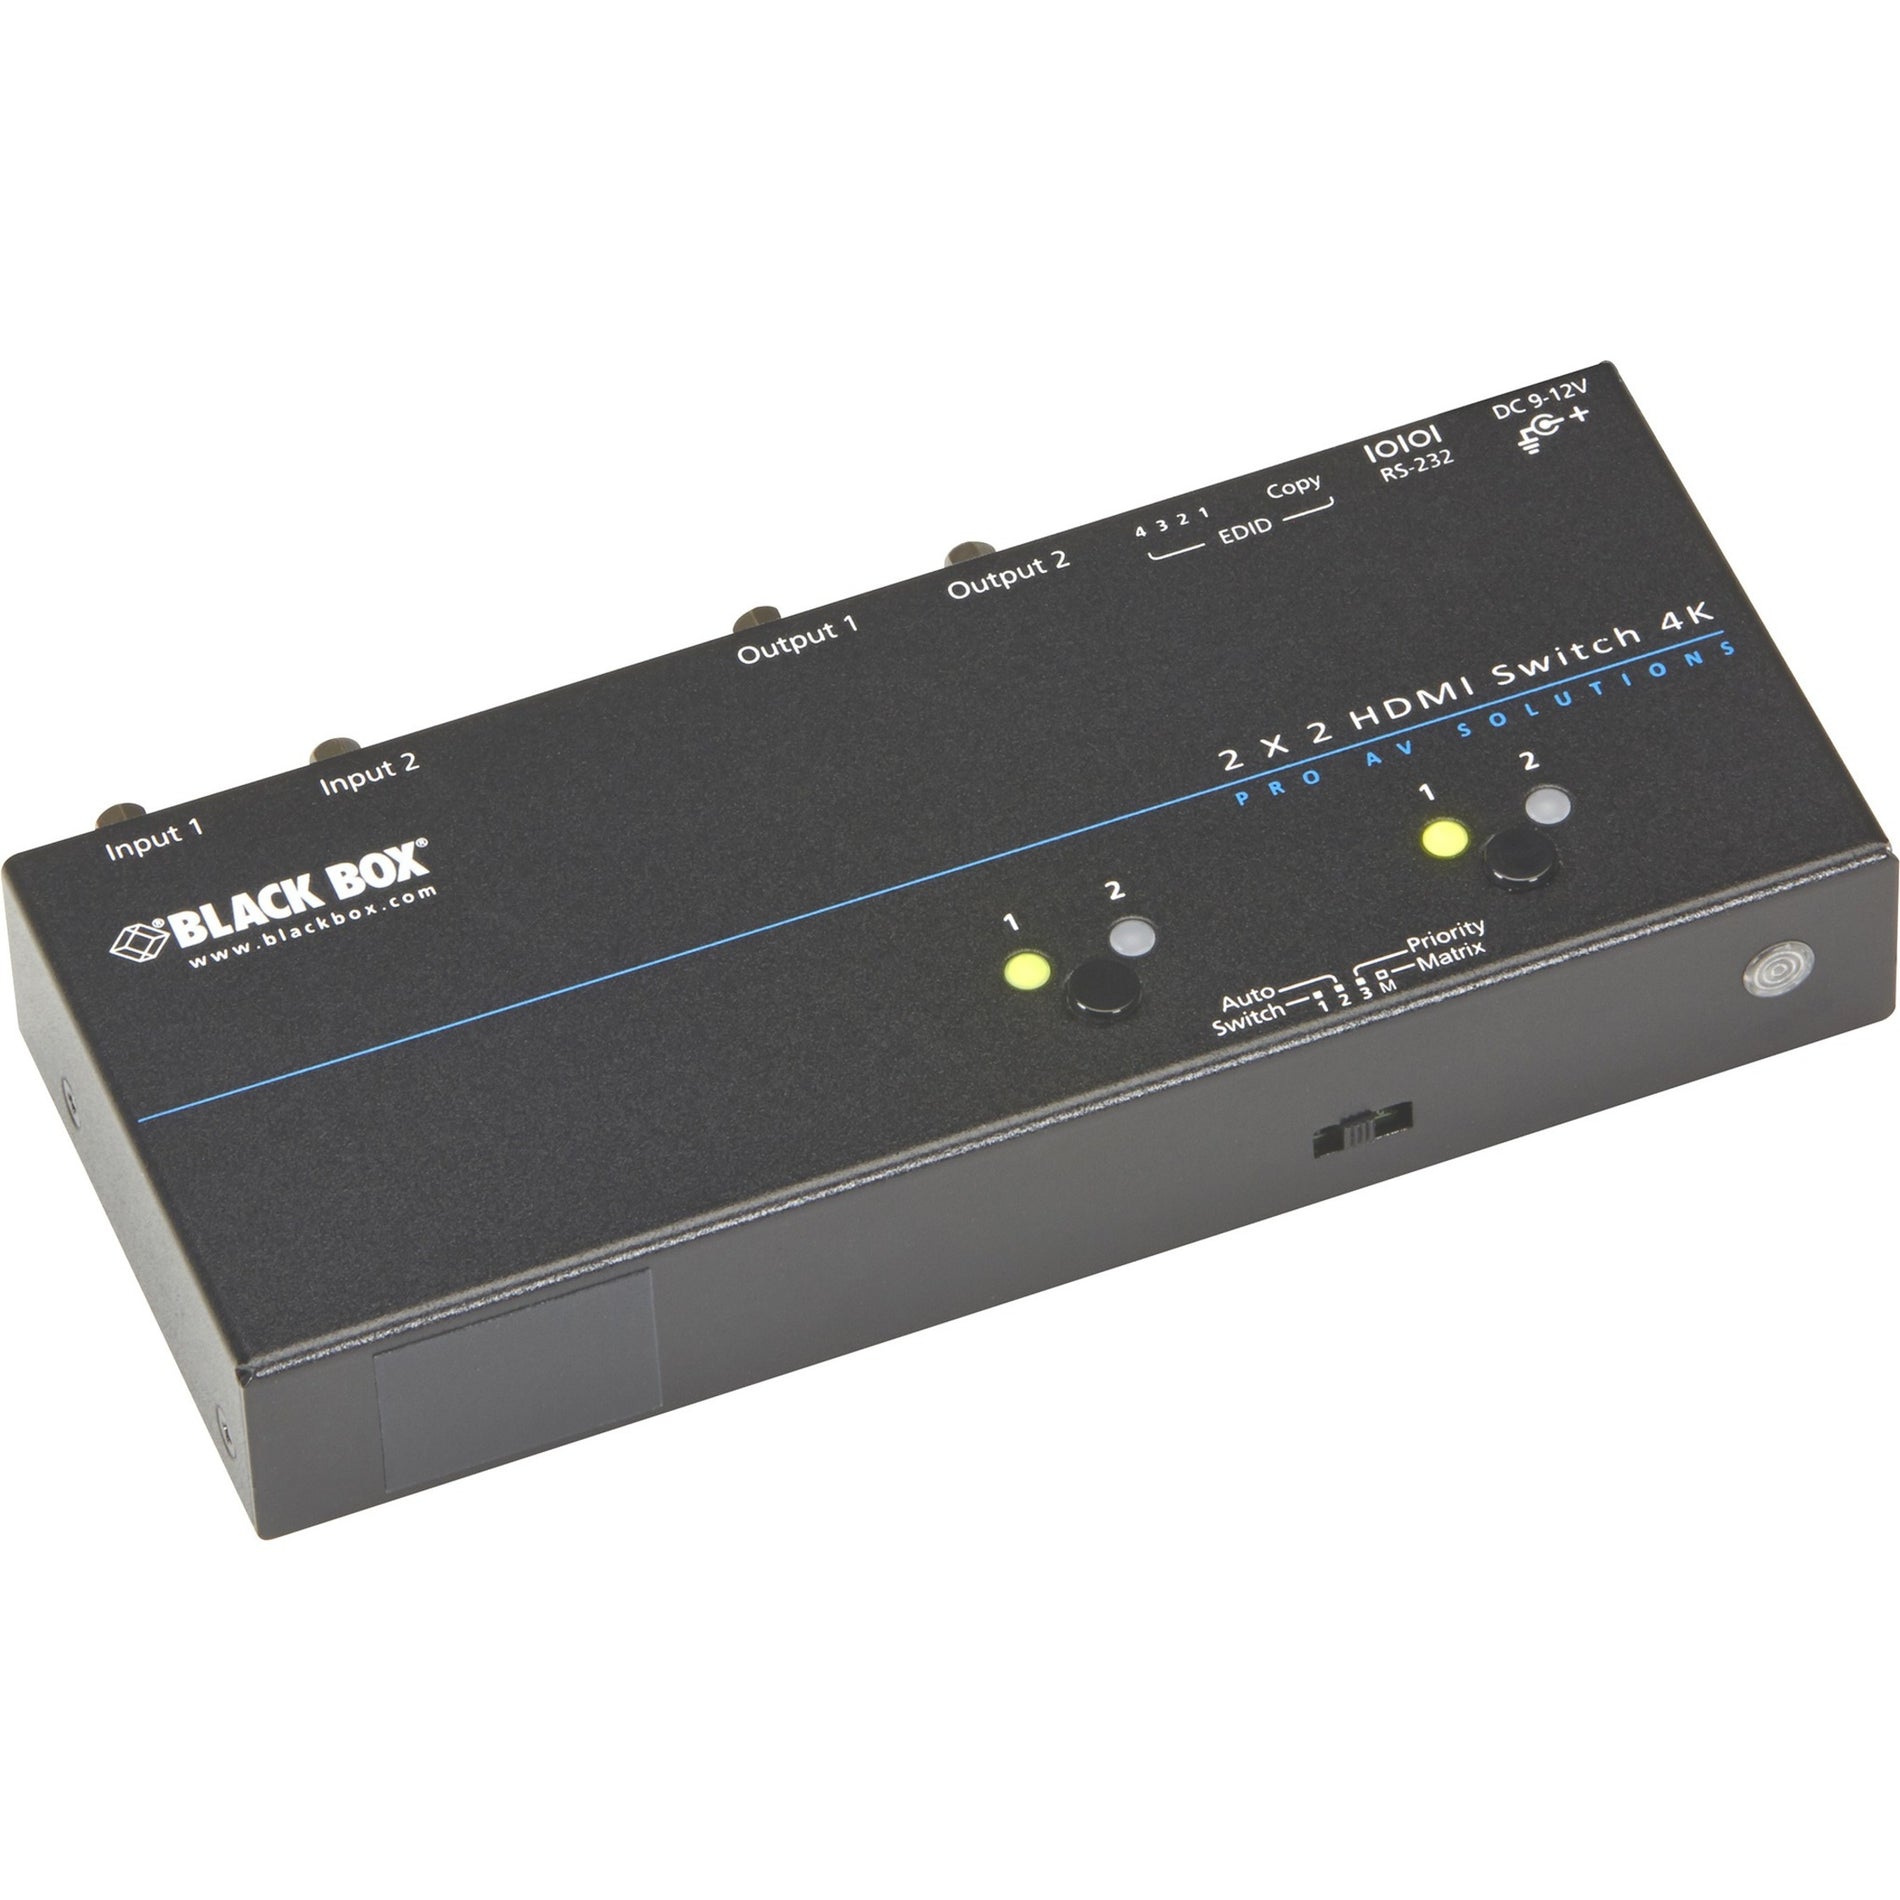 Black Box VSW-HDMI2X2-4K 4K HDMI Matrix Switch - 2 x 2, Easy Video Switching and Control